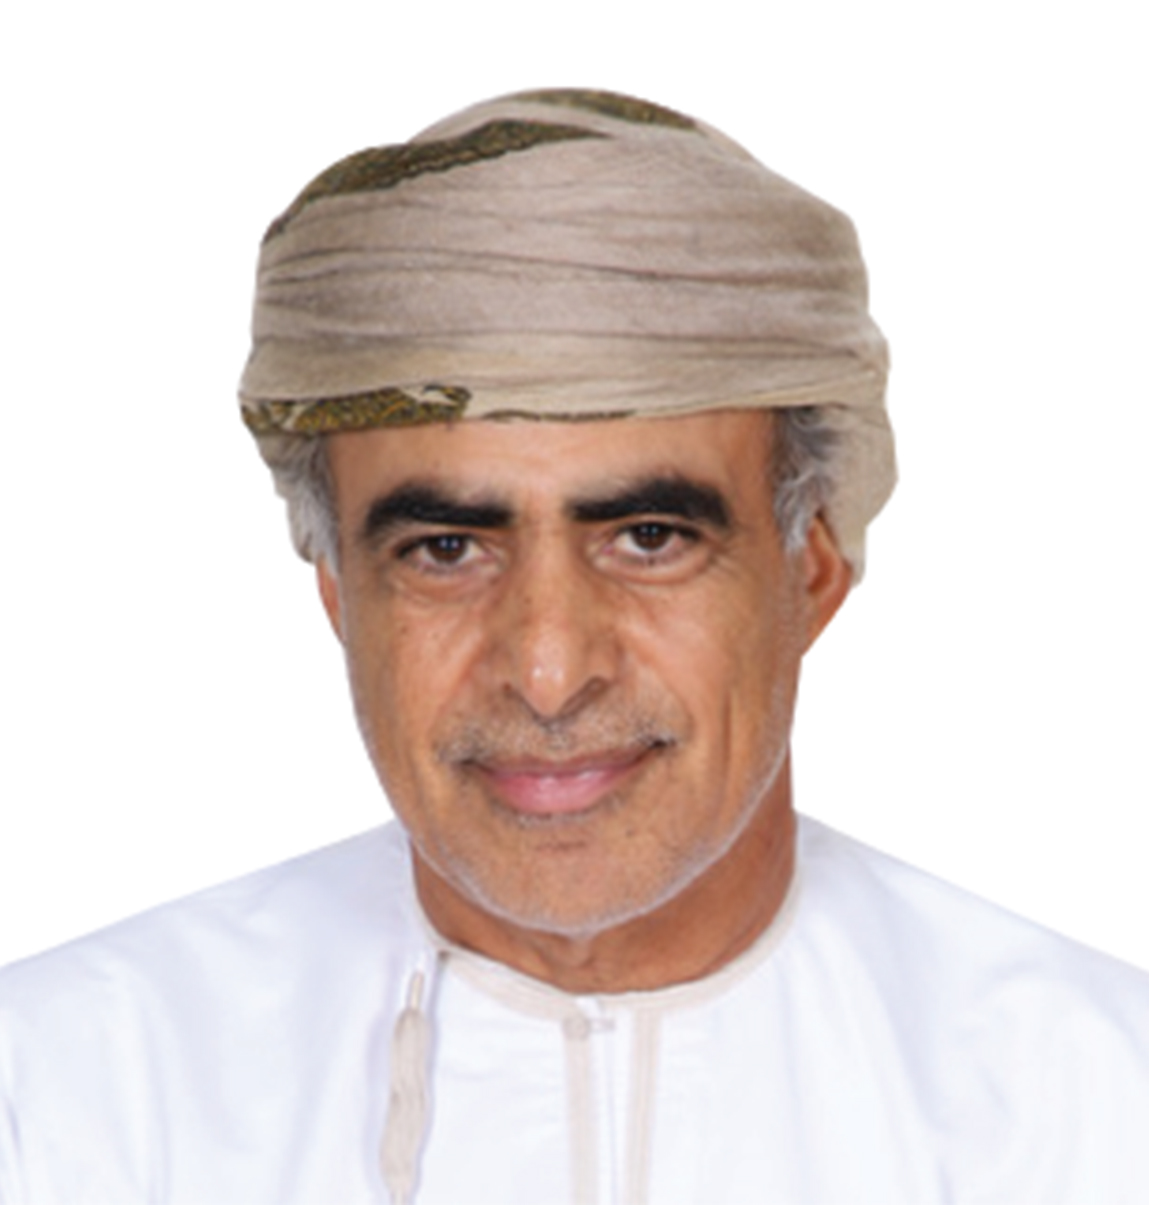 H.E. Dr. Mohammed bin Hamad Al Rumhy